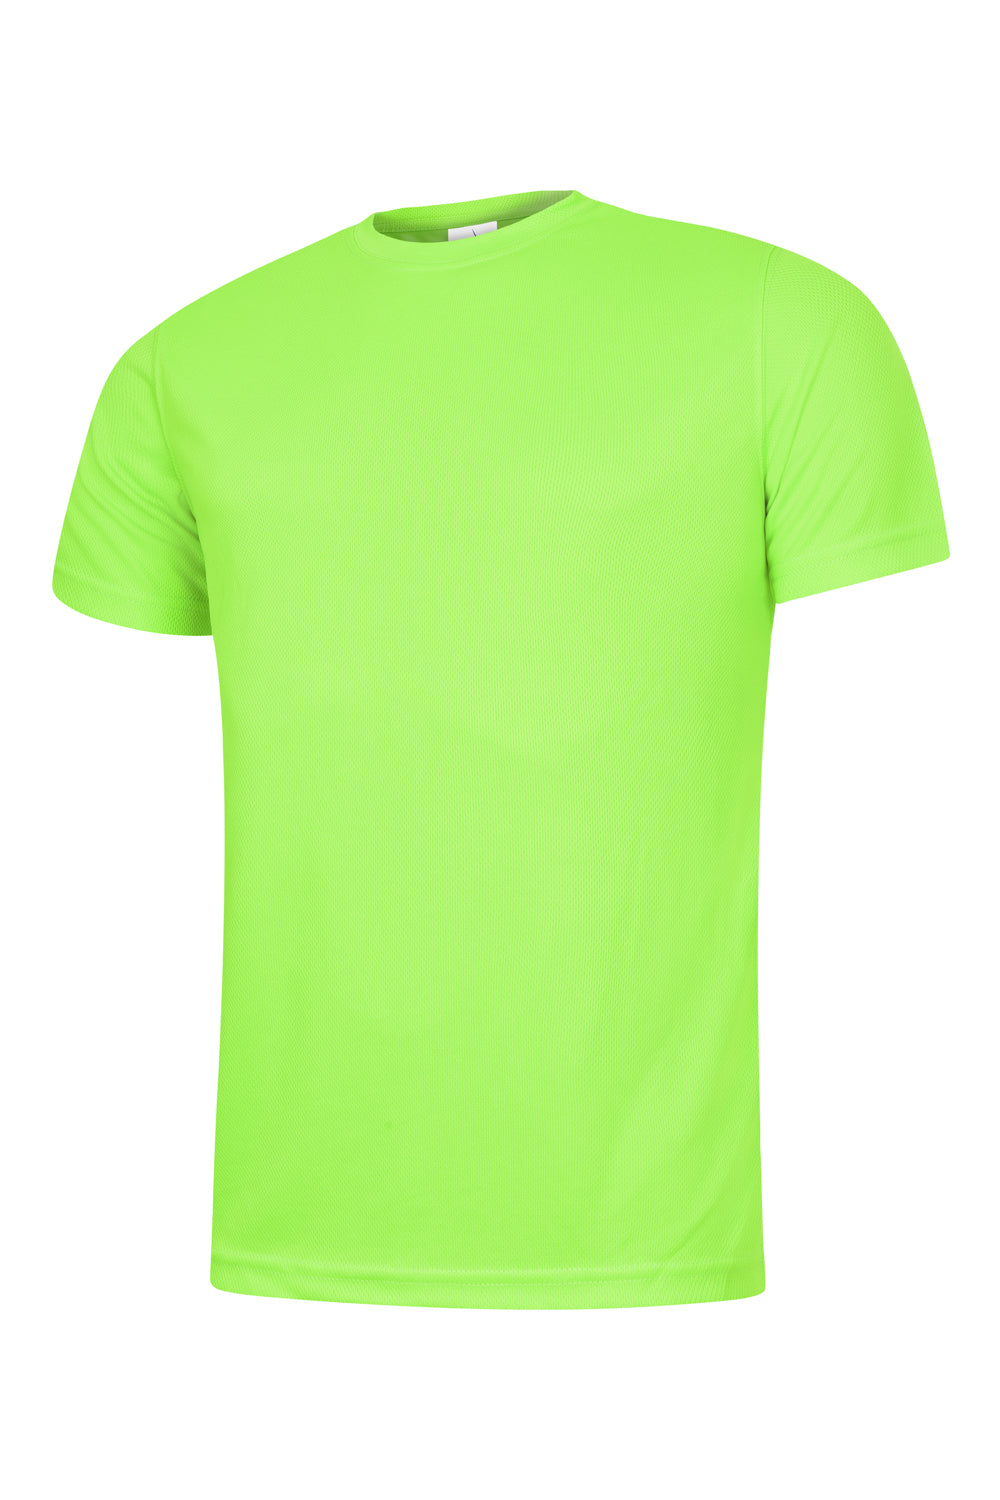 Uneek Mens Ultra Cool T Shirt UC315 - Electric Green